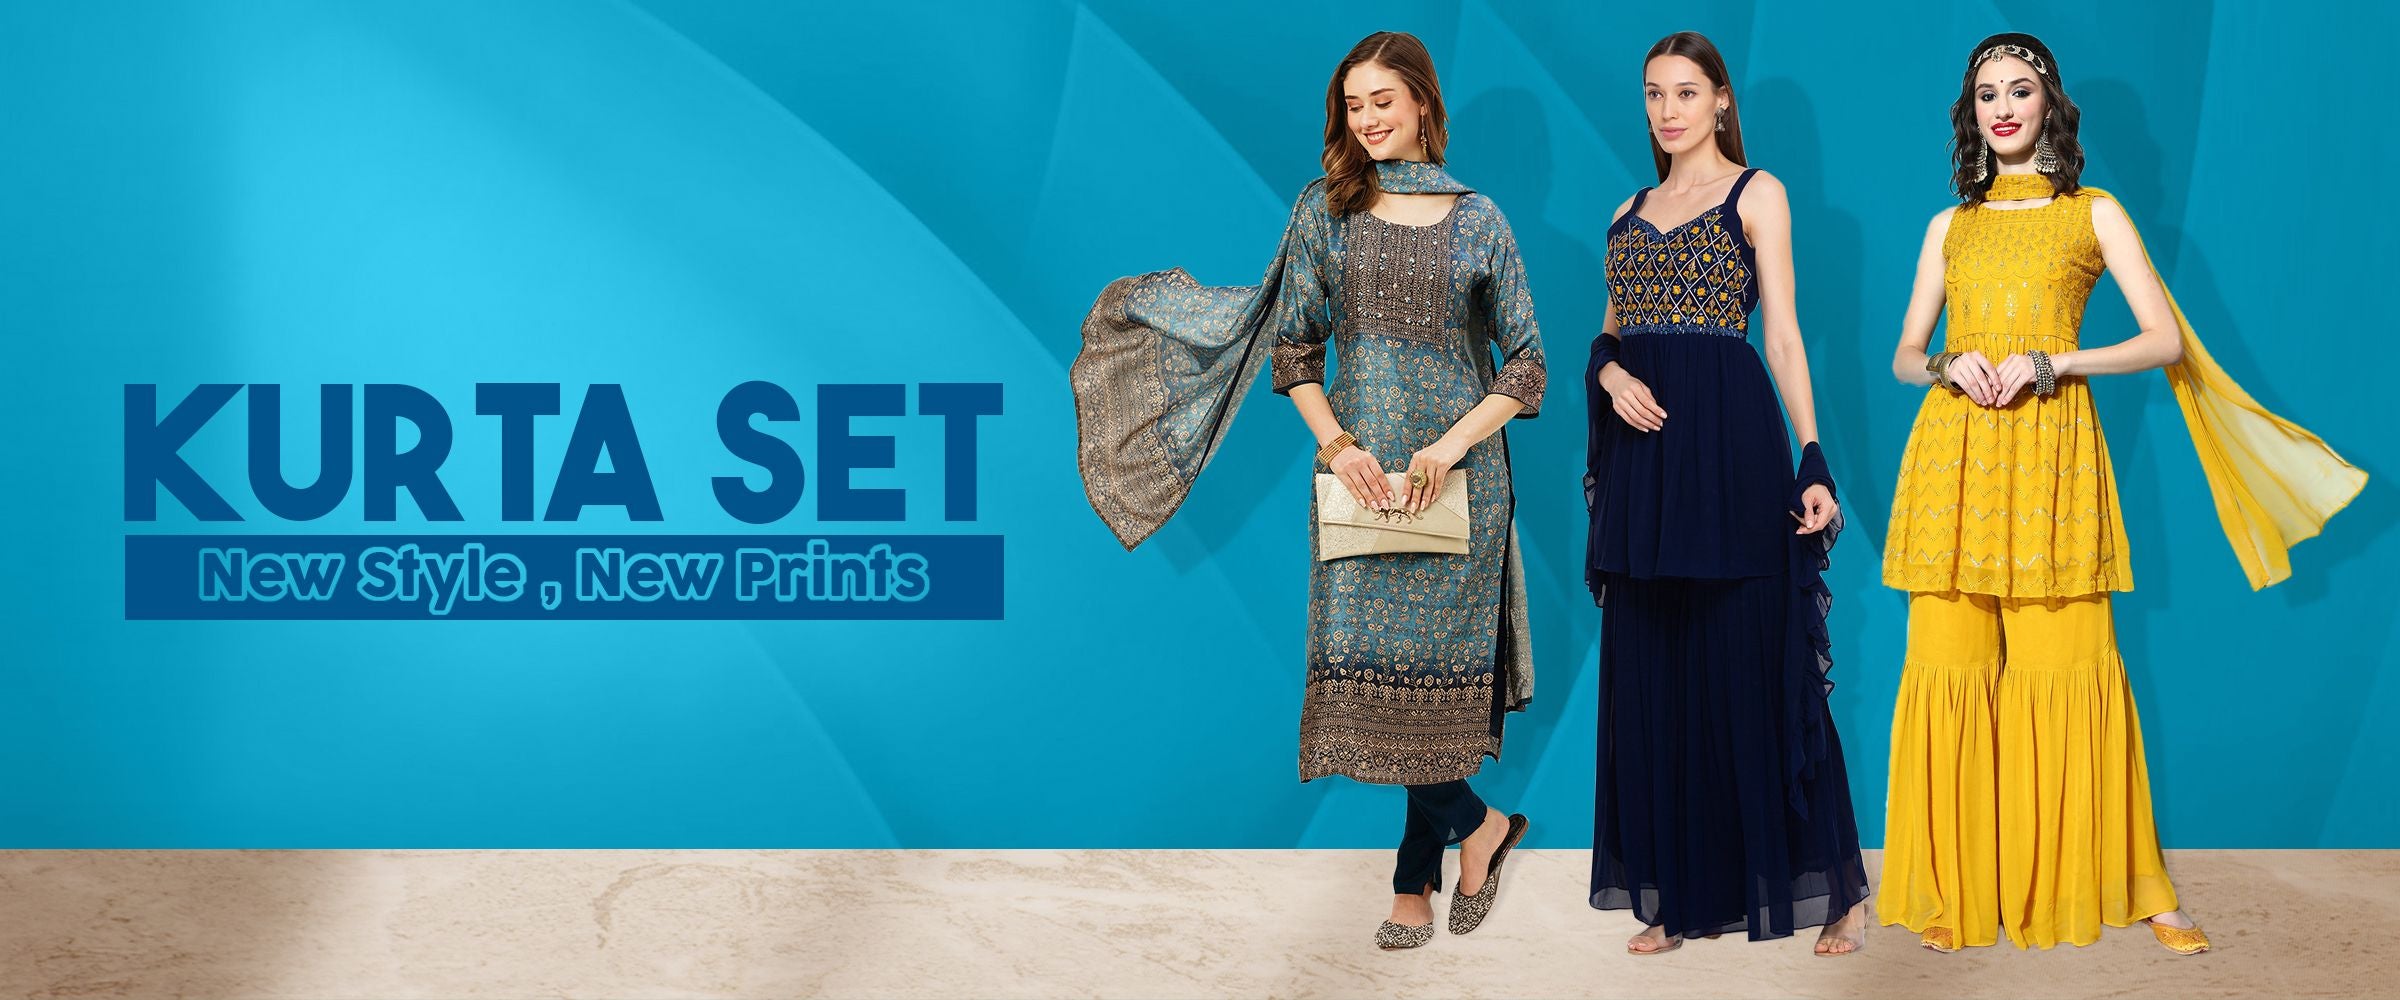 Myntra Kurti Sets Haul(6 Sets)| Under ₹800 | Casual & Party-wear Kurti Sets  - YouTube